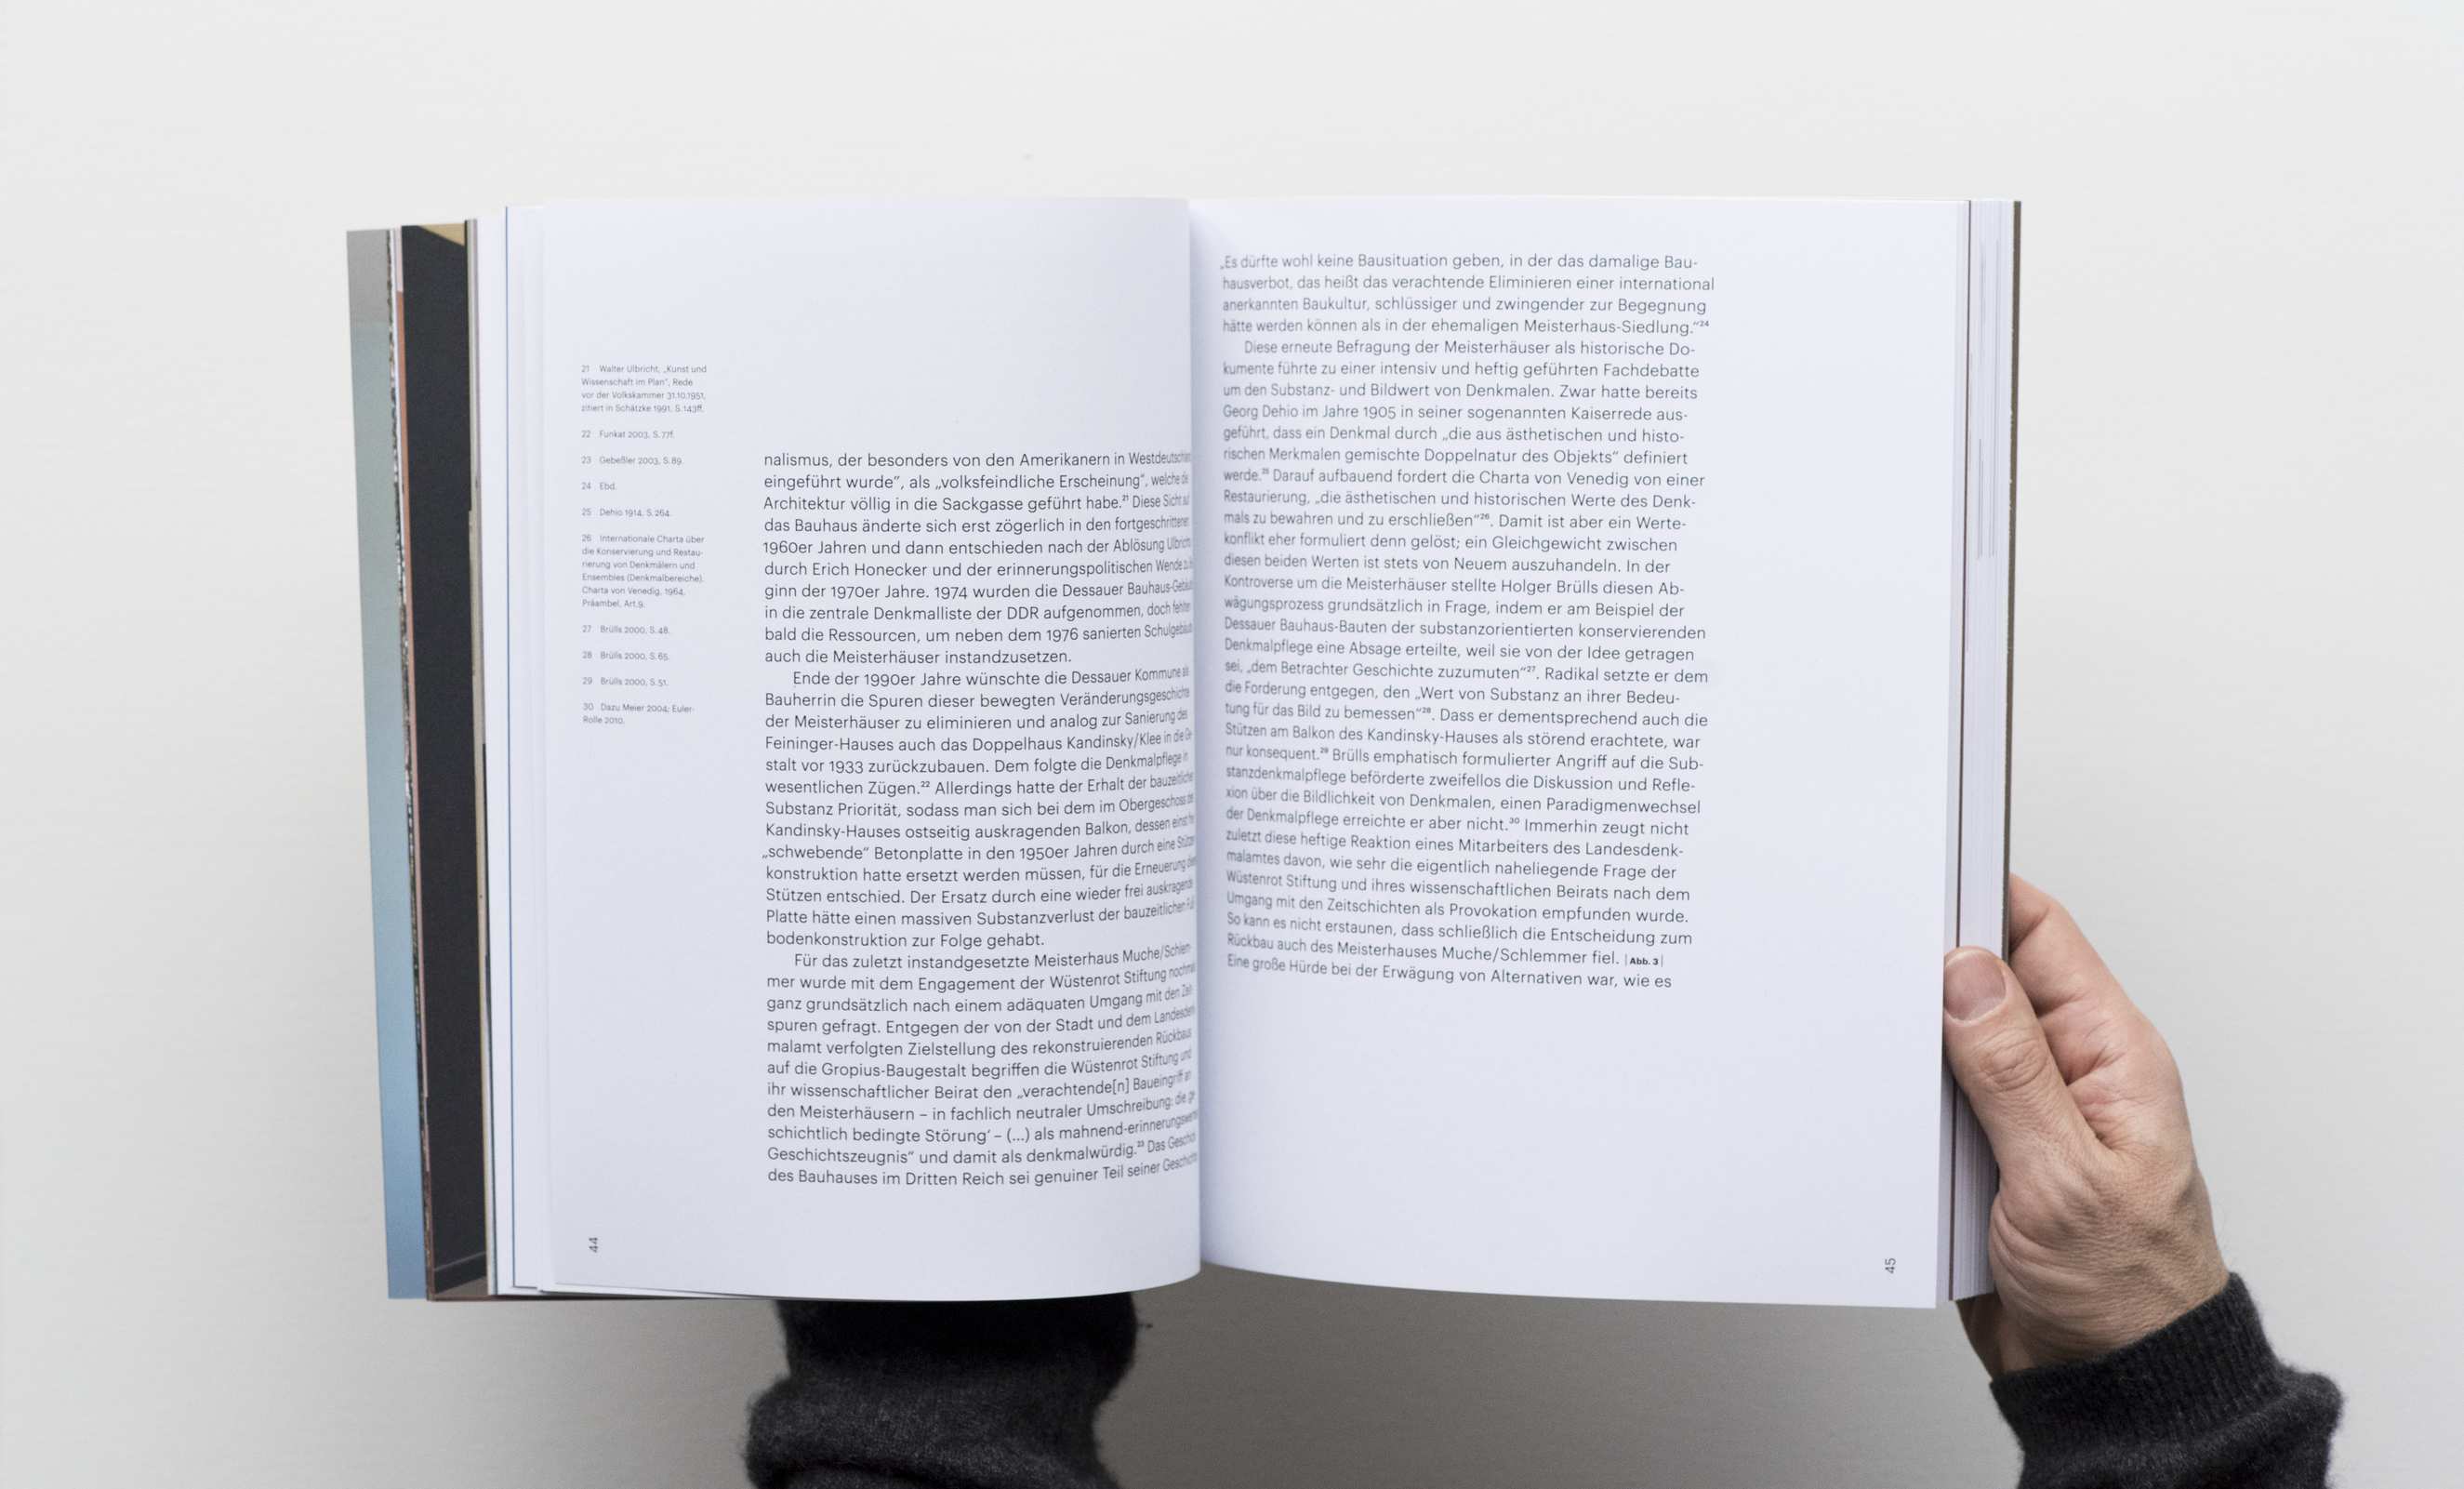 meisterhaus-kandinsky-klee-book-7-2650x1600px